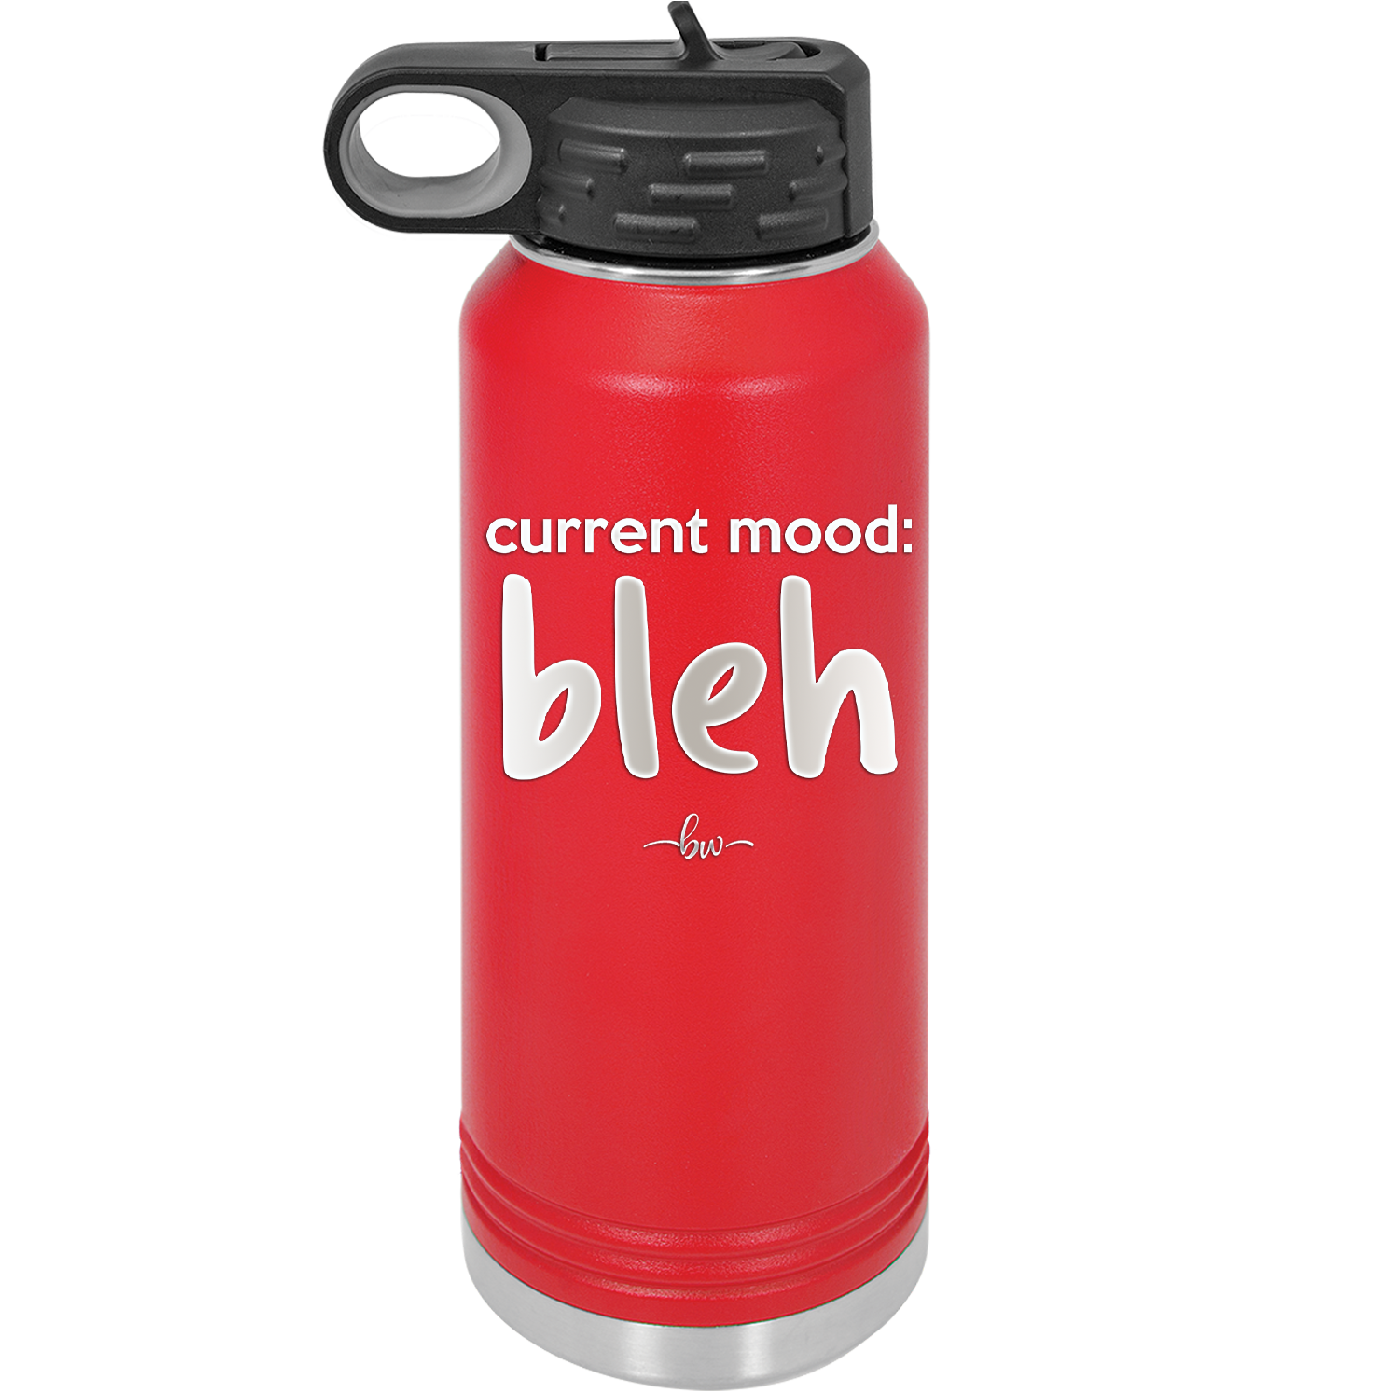 Current Mood: bleh - Laser Engraved Stainless Steel Drinkware - 2378 -